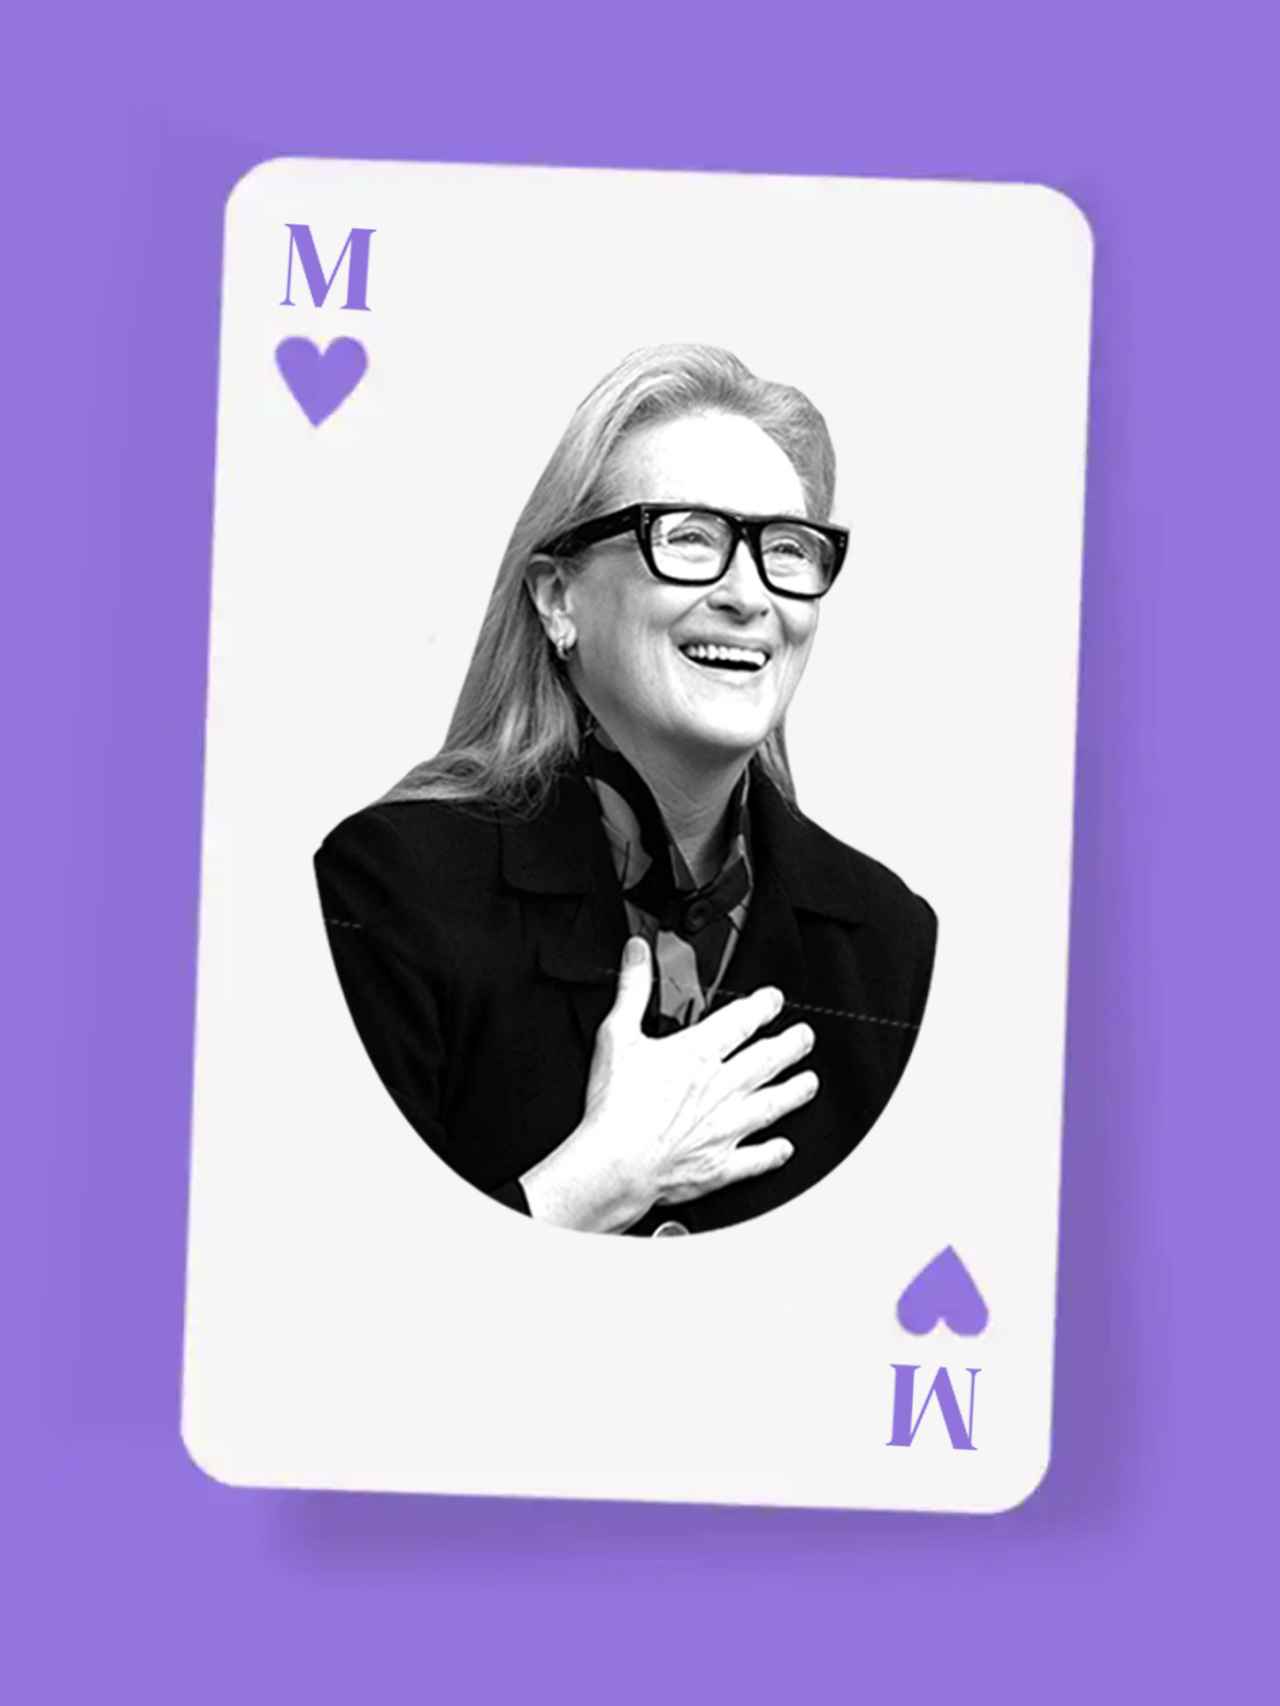 Maryl Streep